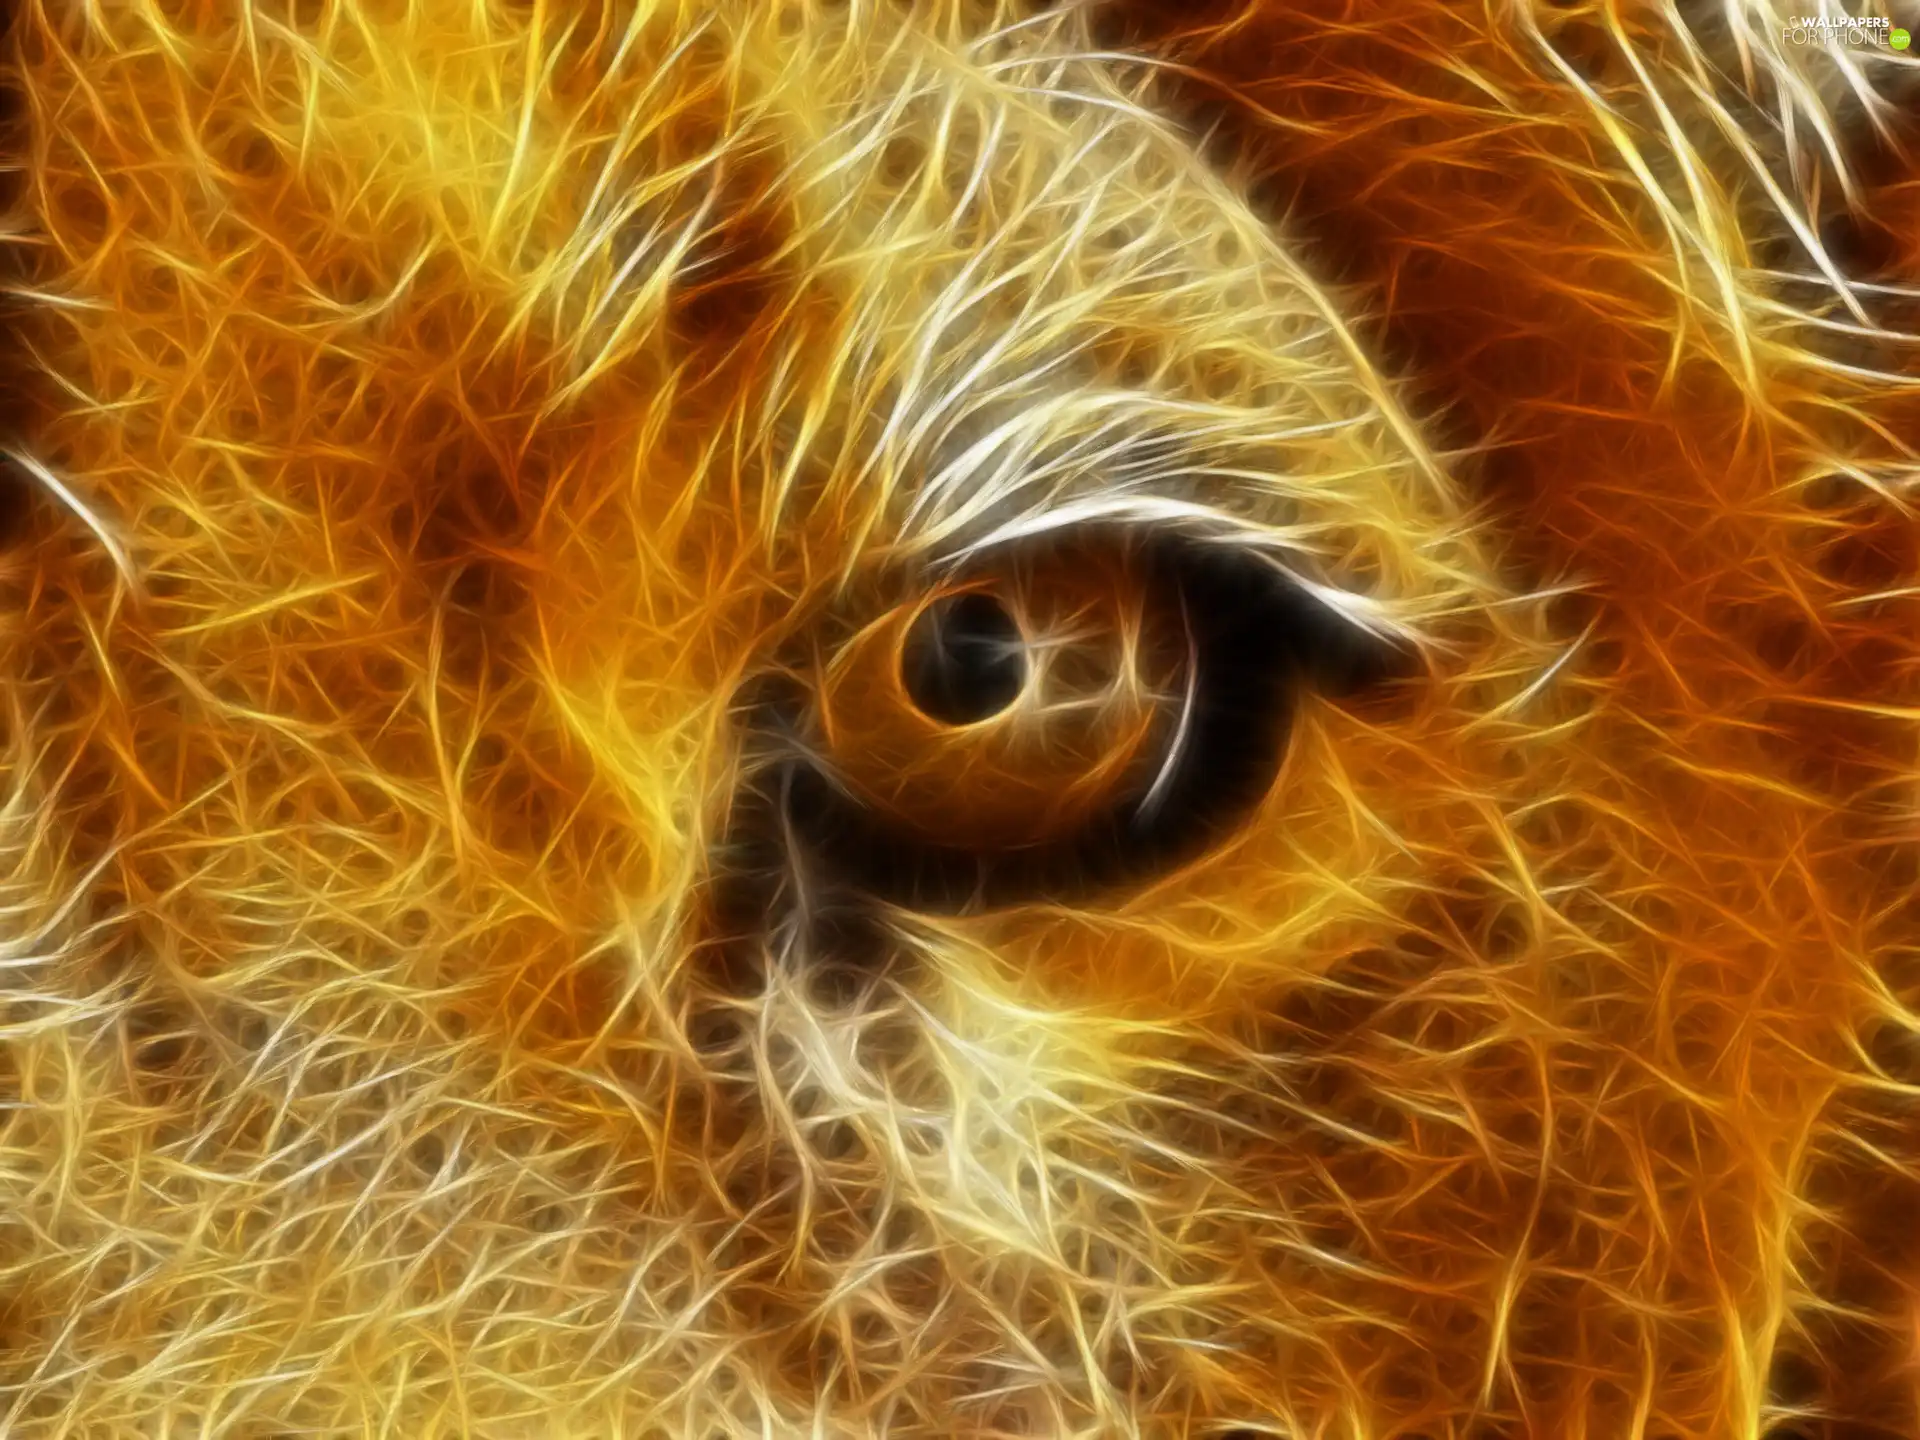 graphics, Lion, eye